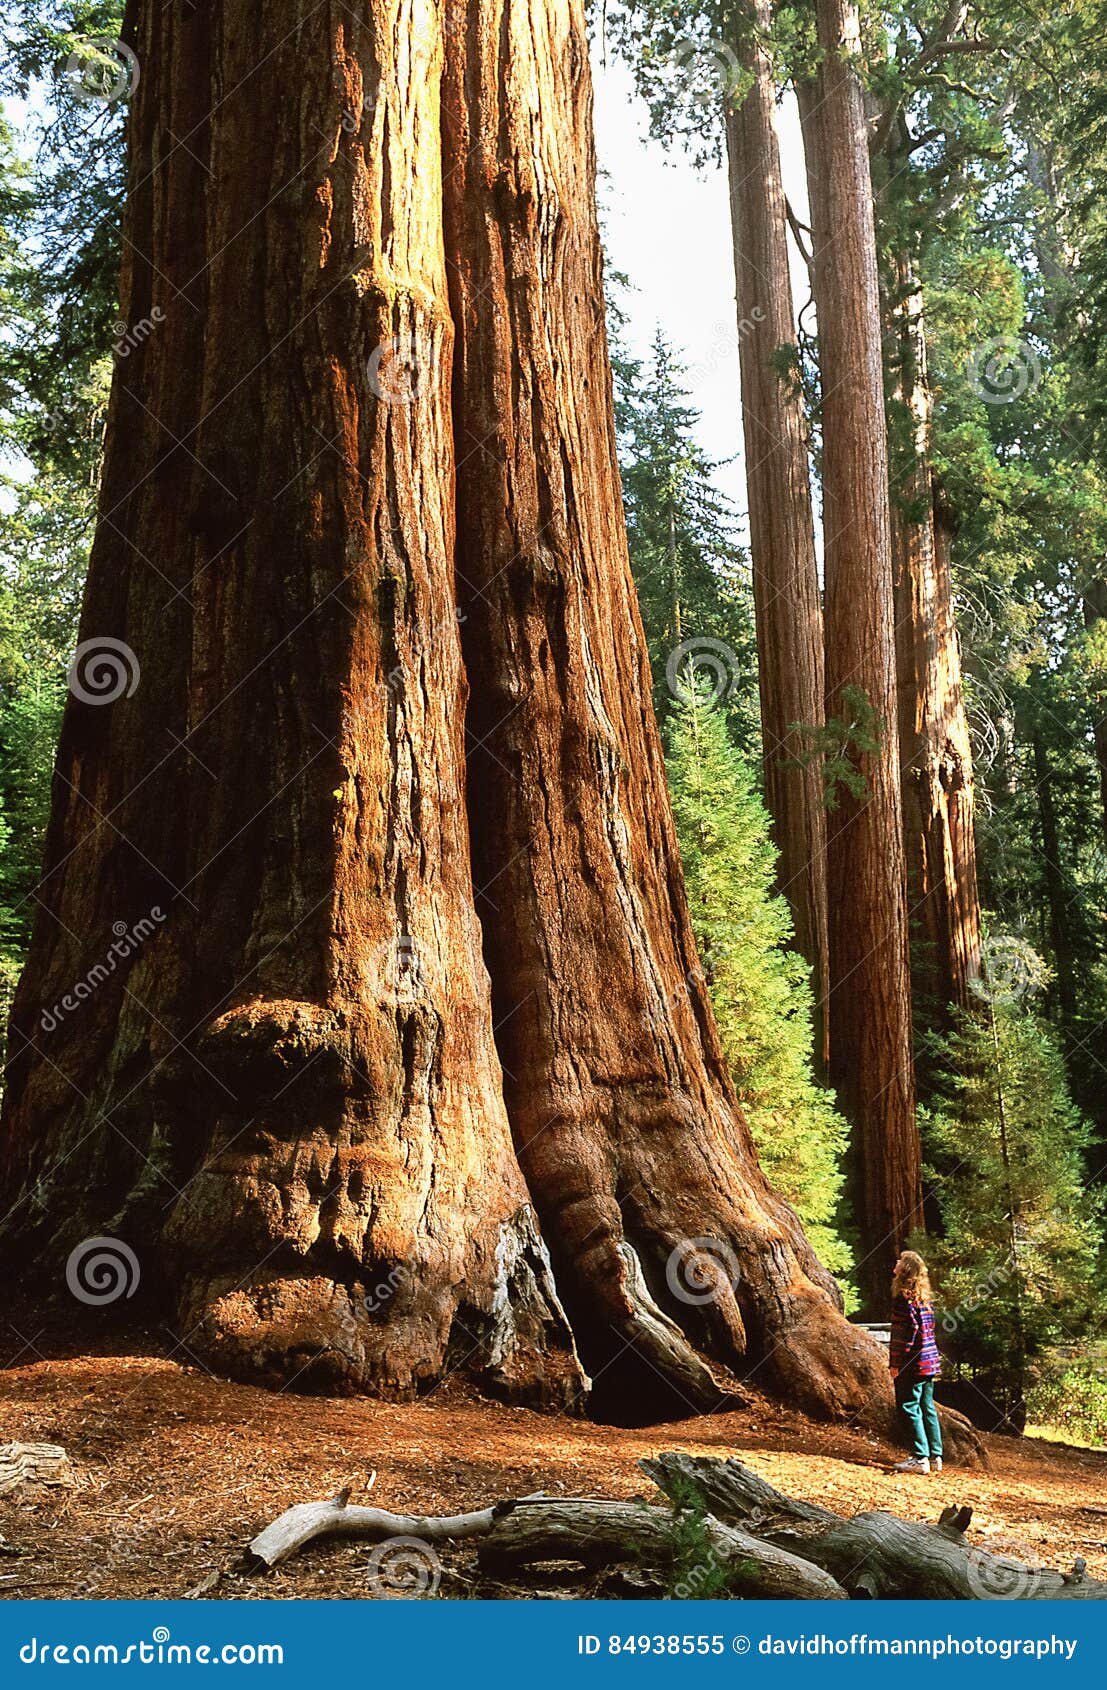 giant sequoia tree named general sherman tree, mr on file